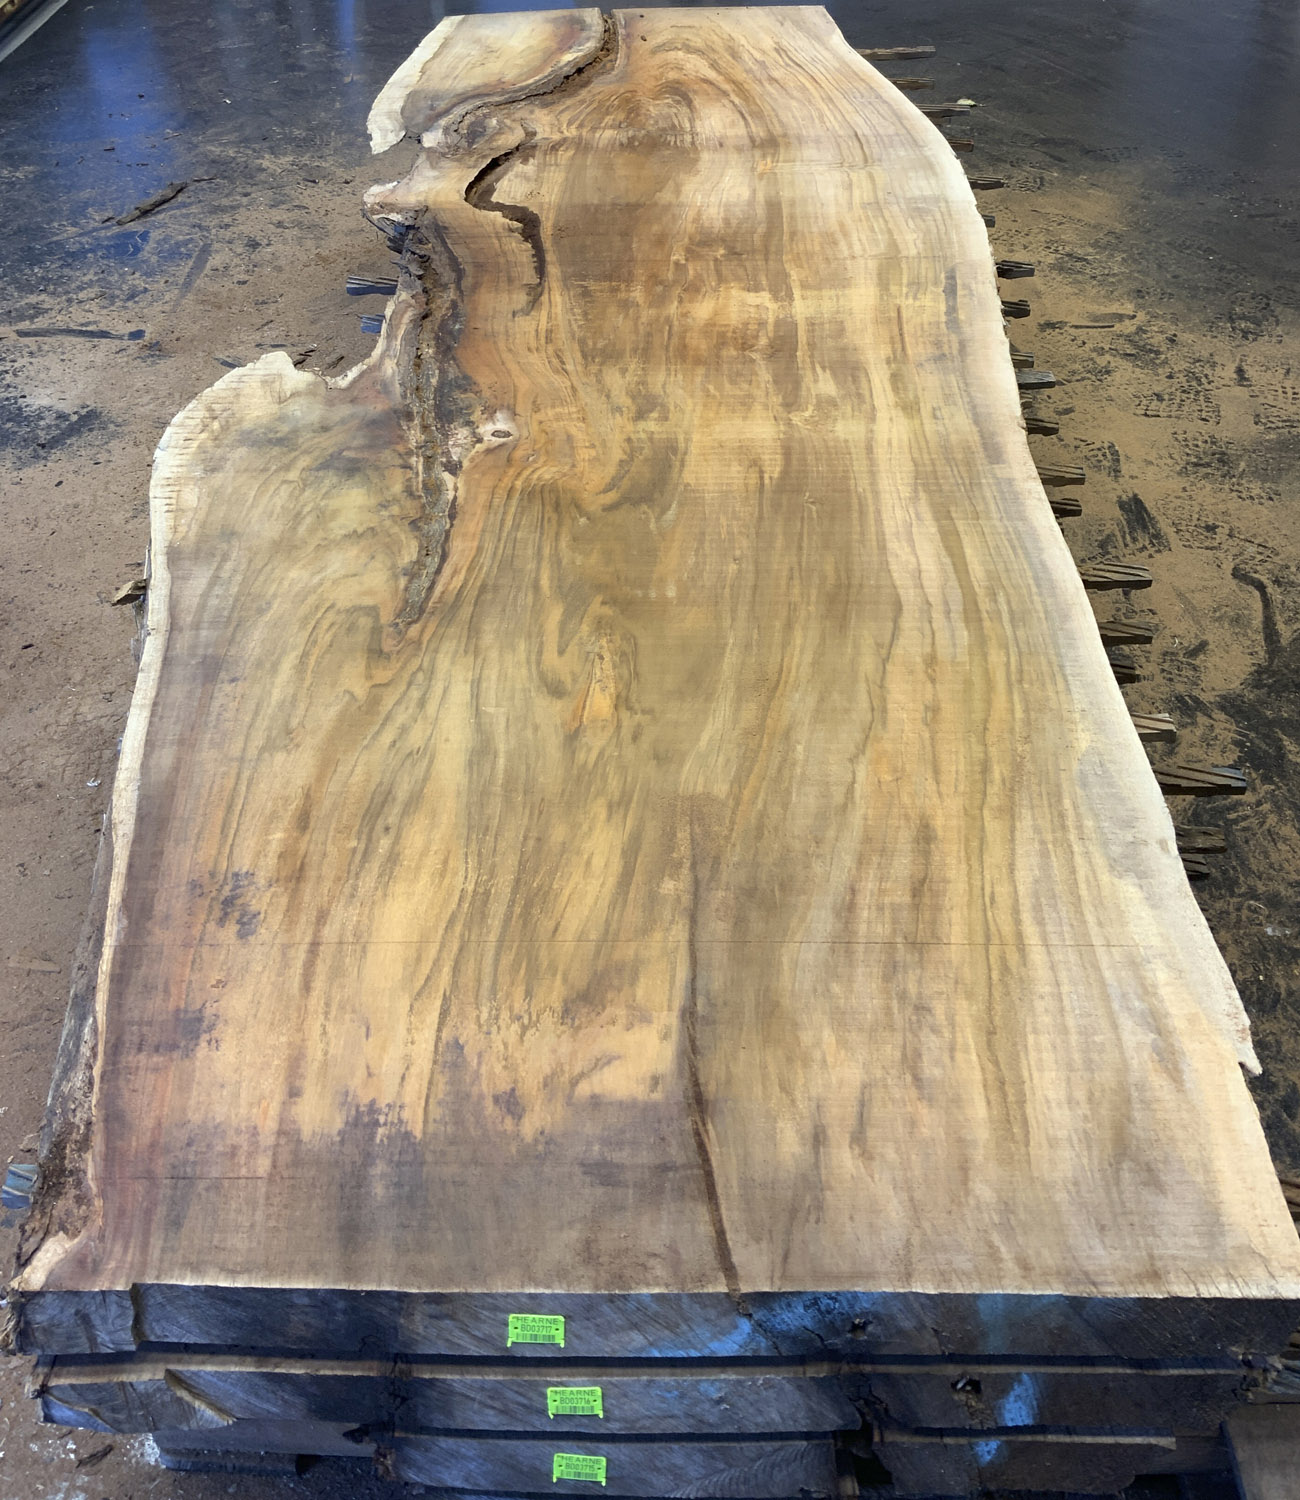 Gorgeous Koa Boards at Hearne Hardwood